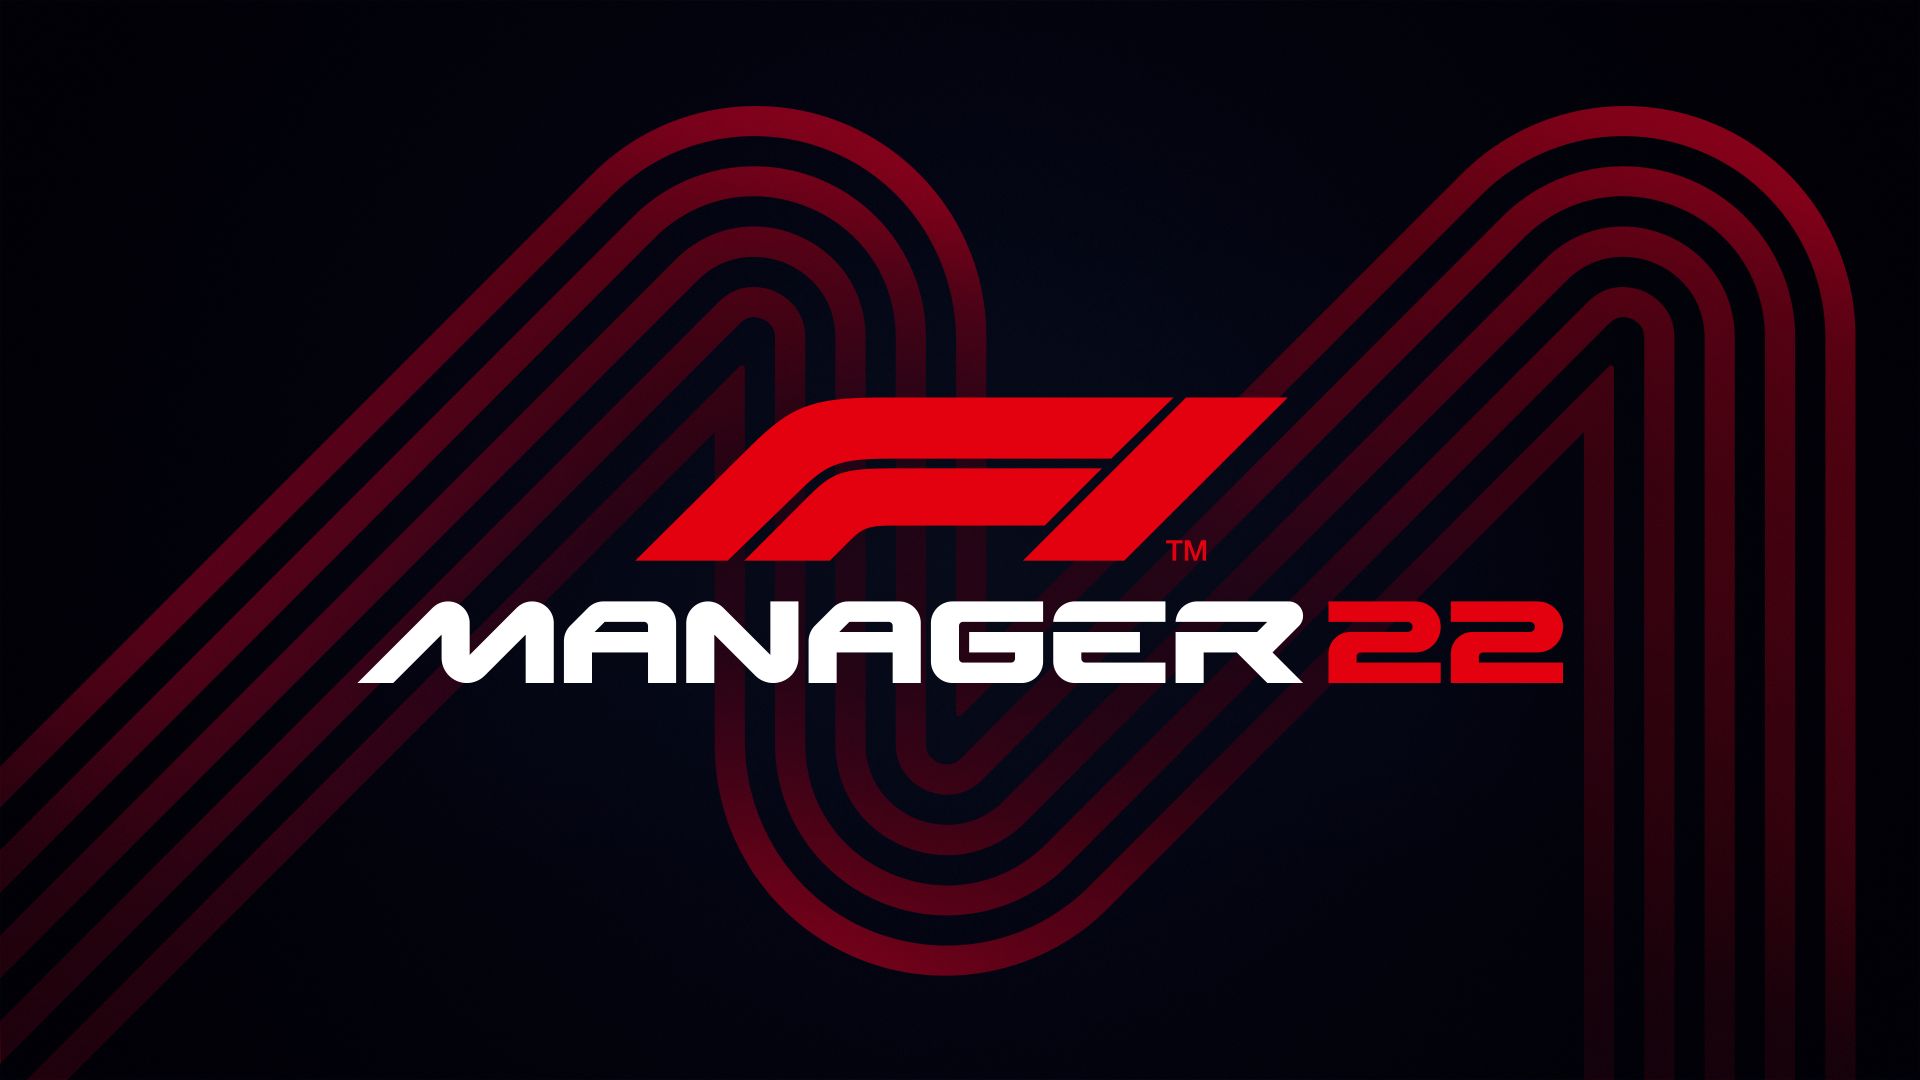 F1 Manager 2022 ขายไปได้มากกว่า 600,000 ชุด ต่ำว่ามาตรฐานที่คาดเอาไว้